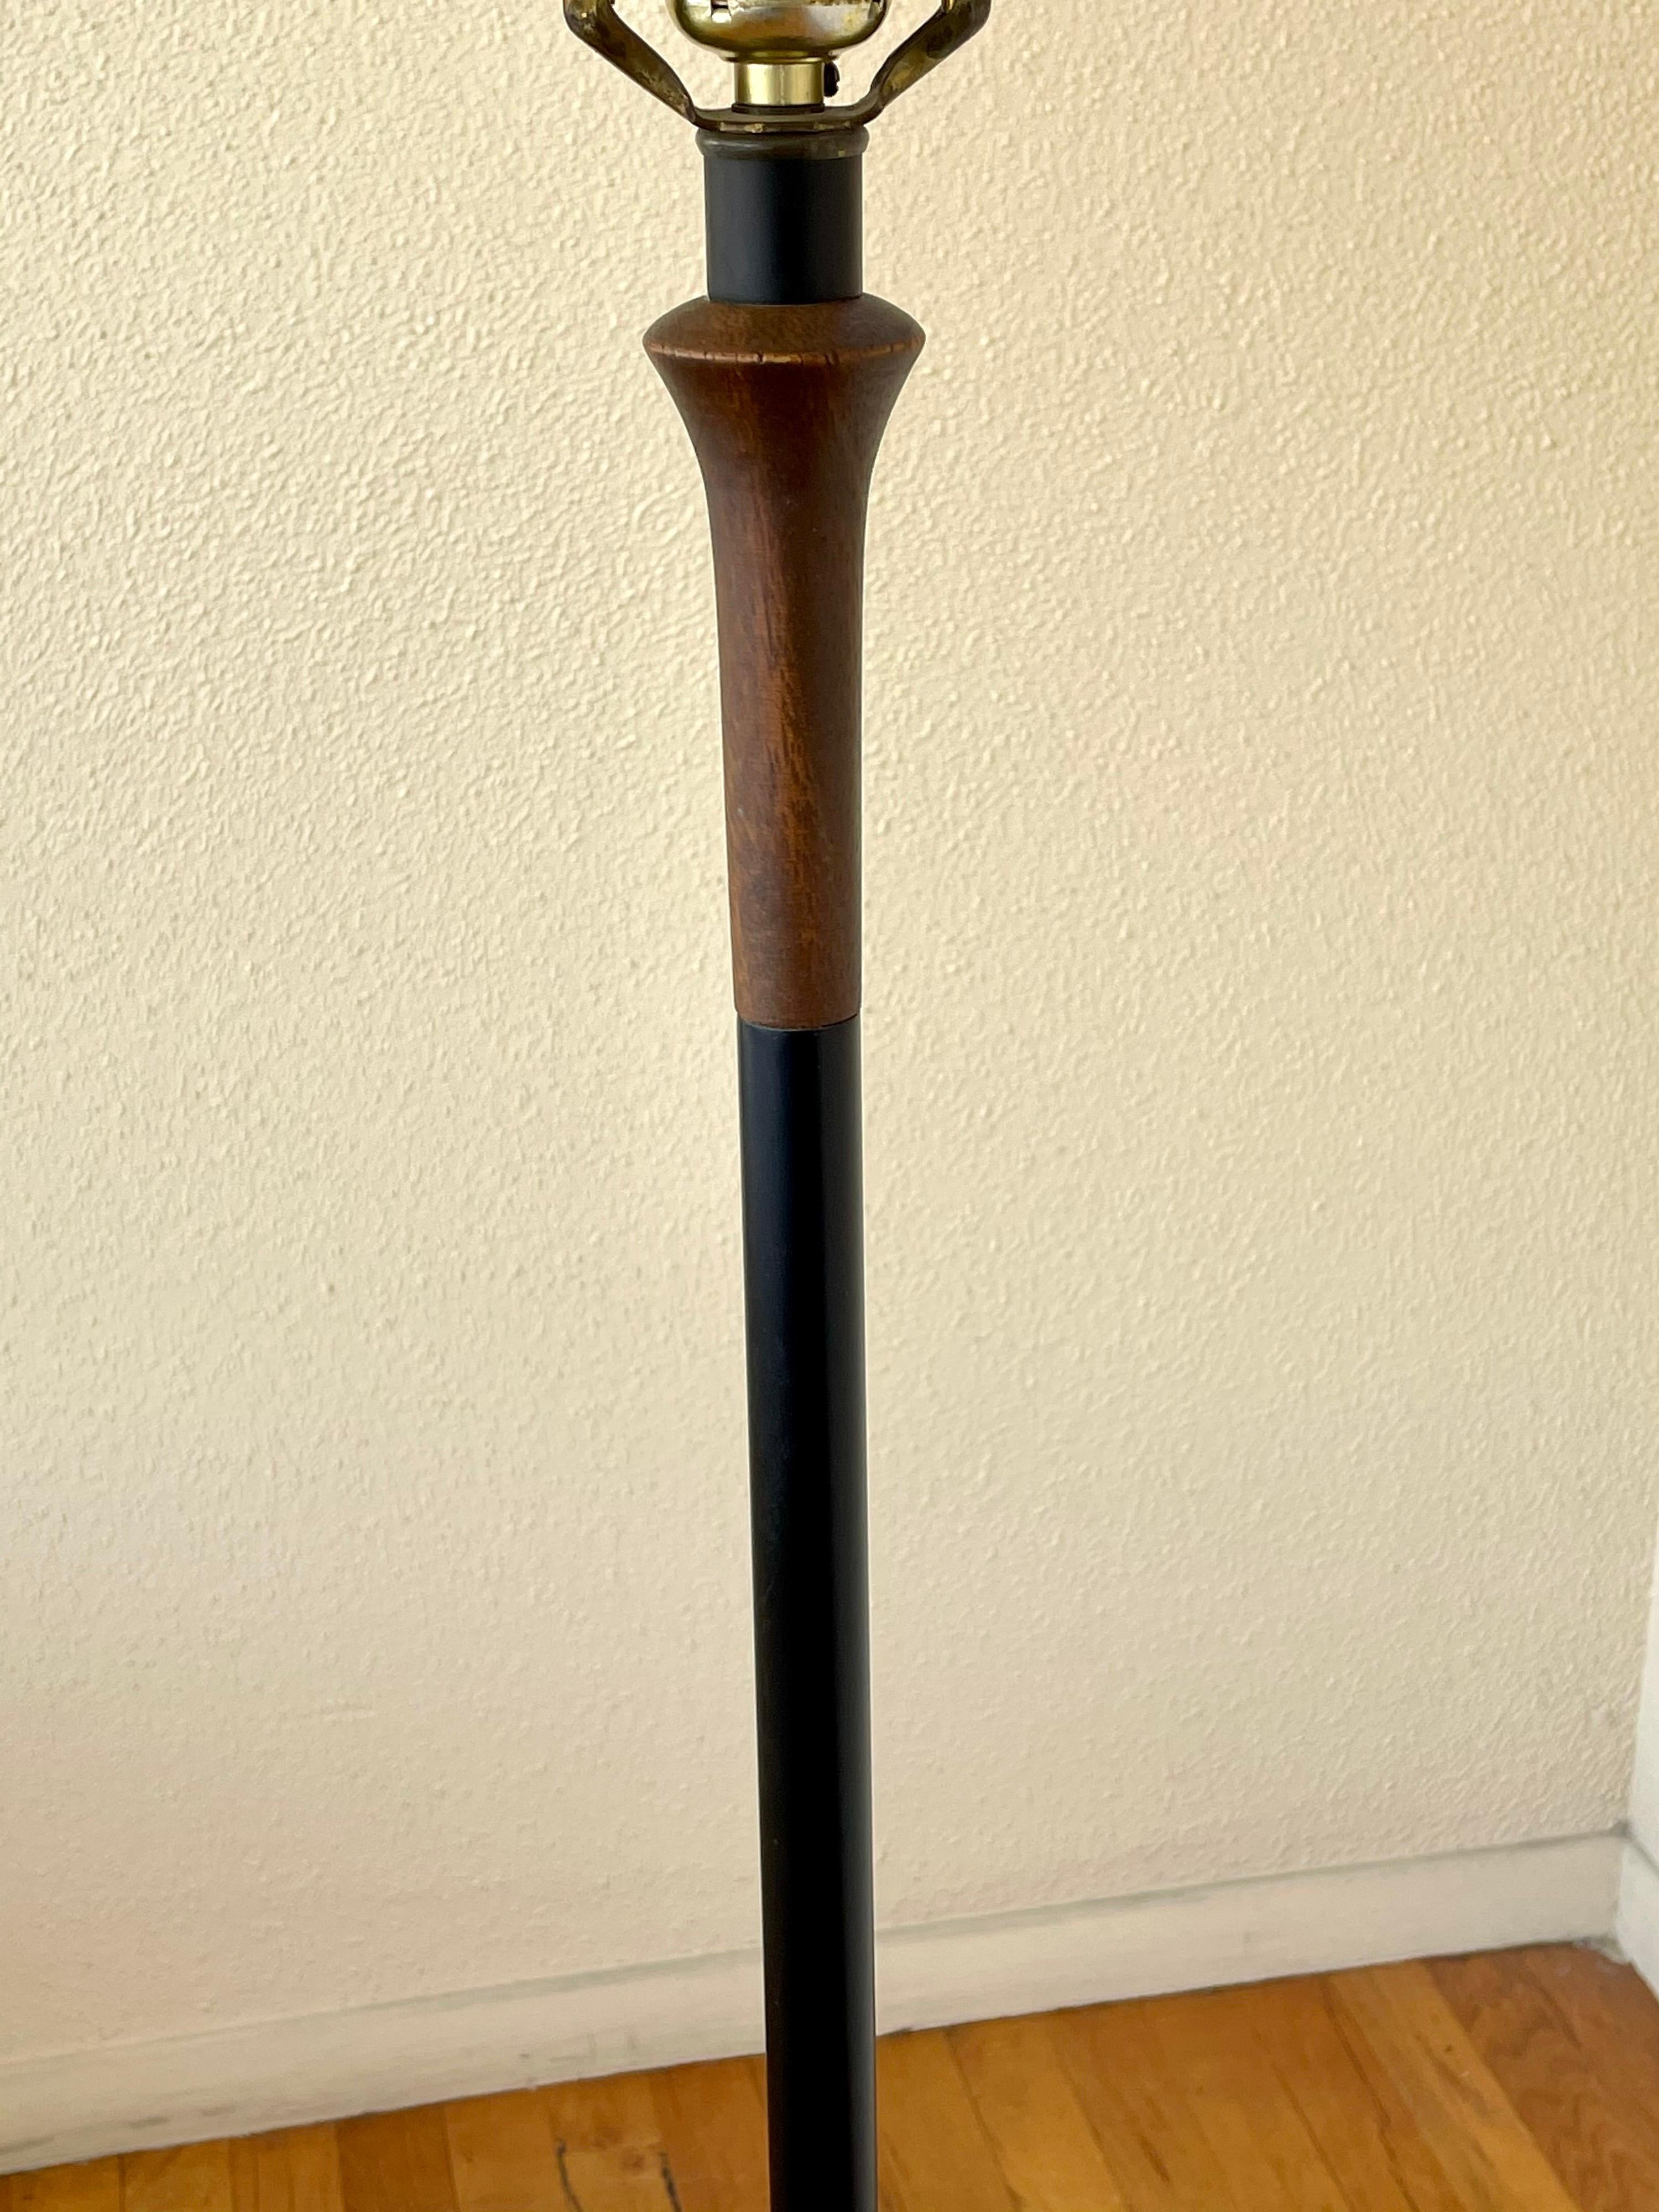 American Mid-Century Modern Floor Lamp by Laurel Lamp Company 1